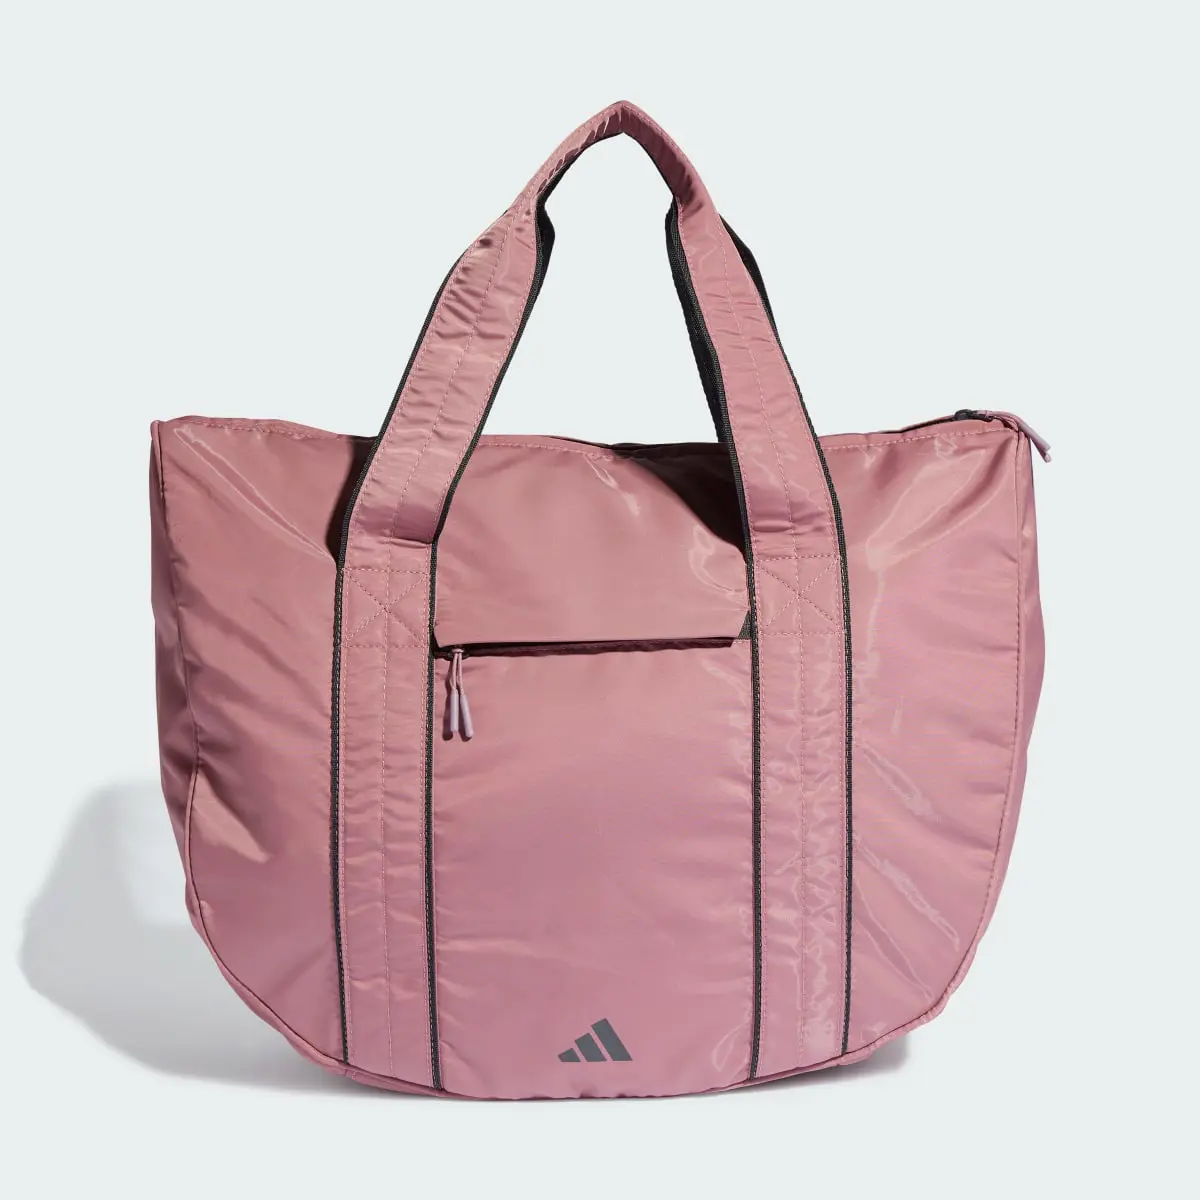 Adidas Yoga Tote Bag. 2